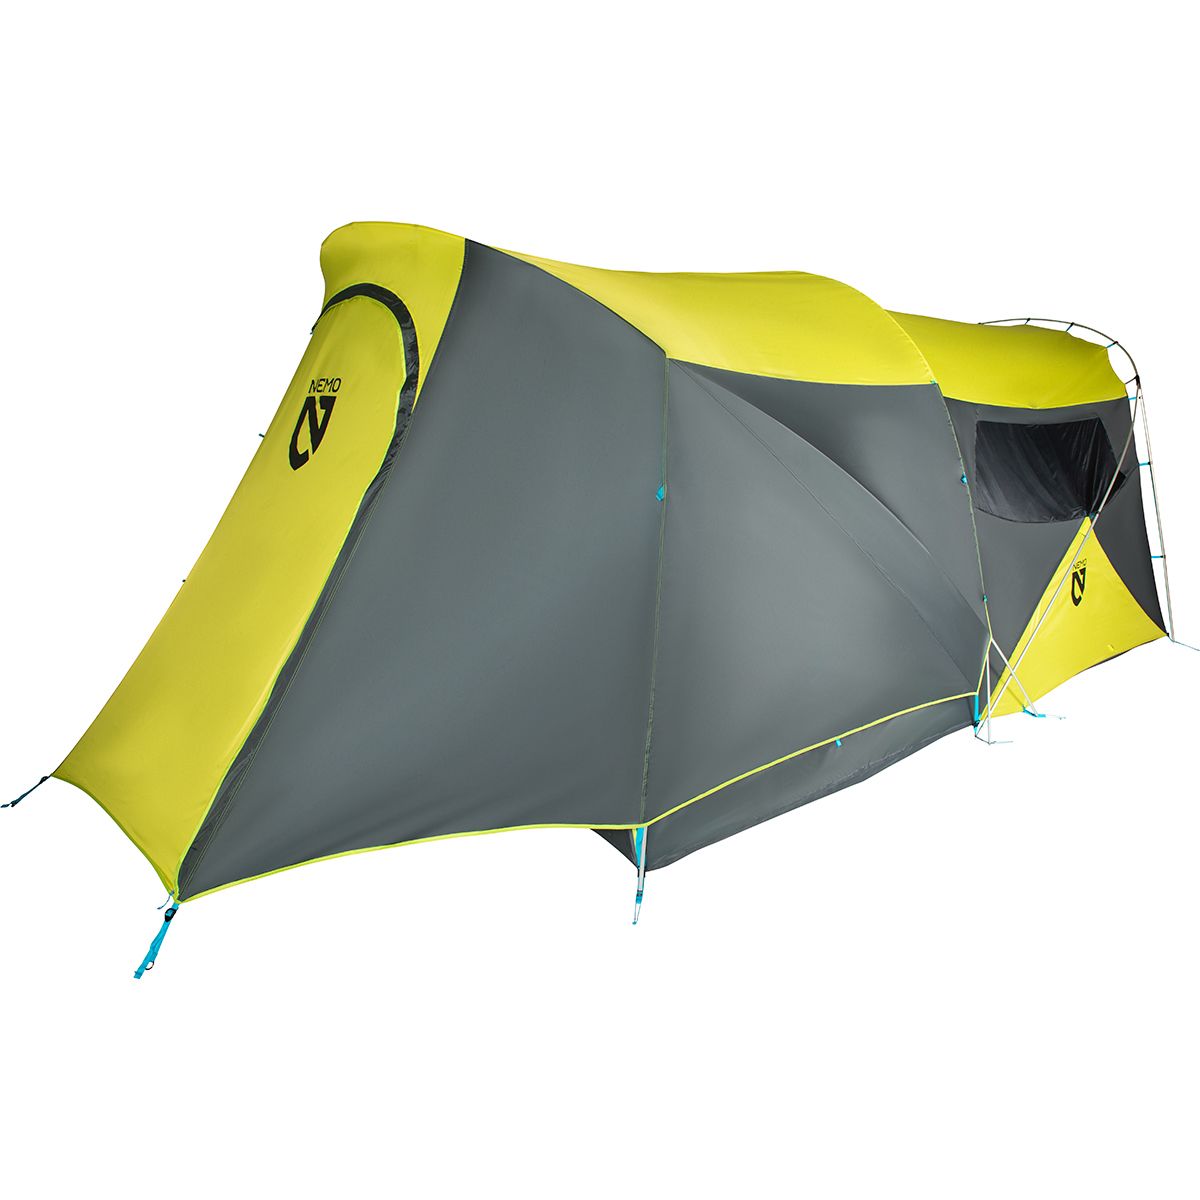 NEMO Equipment Inc. Wagontop 8P Tent: 8-Person 3-Season